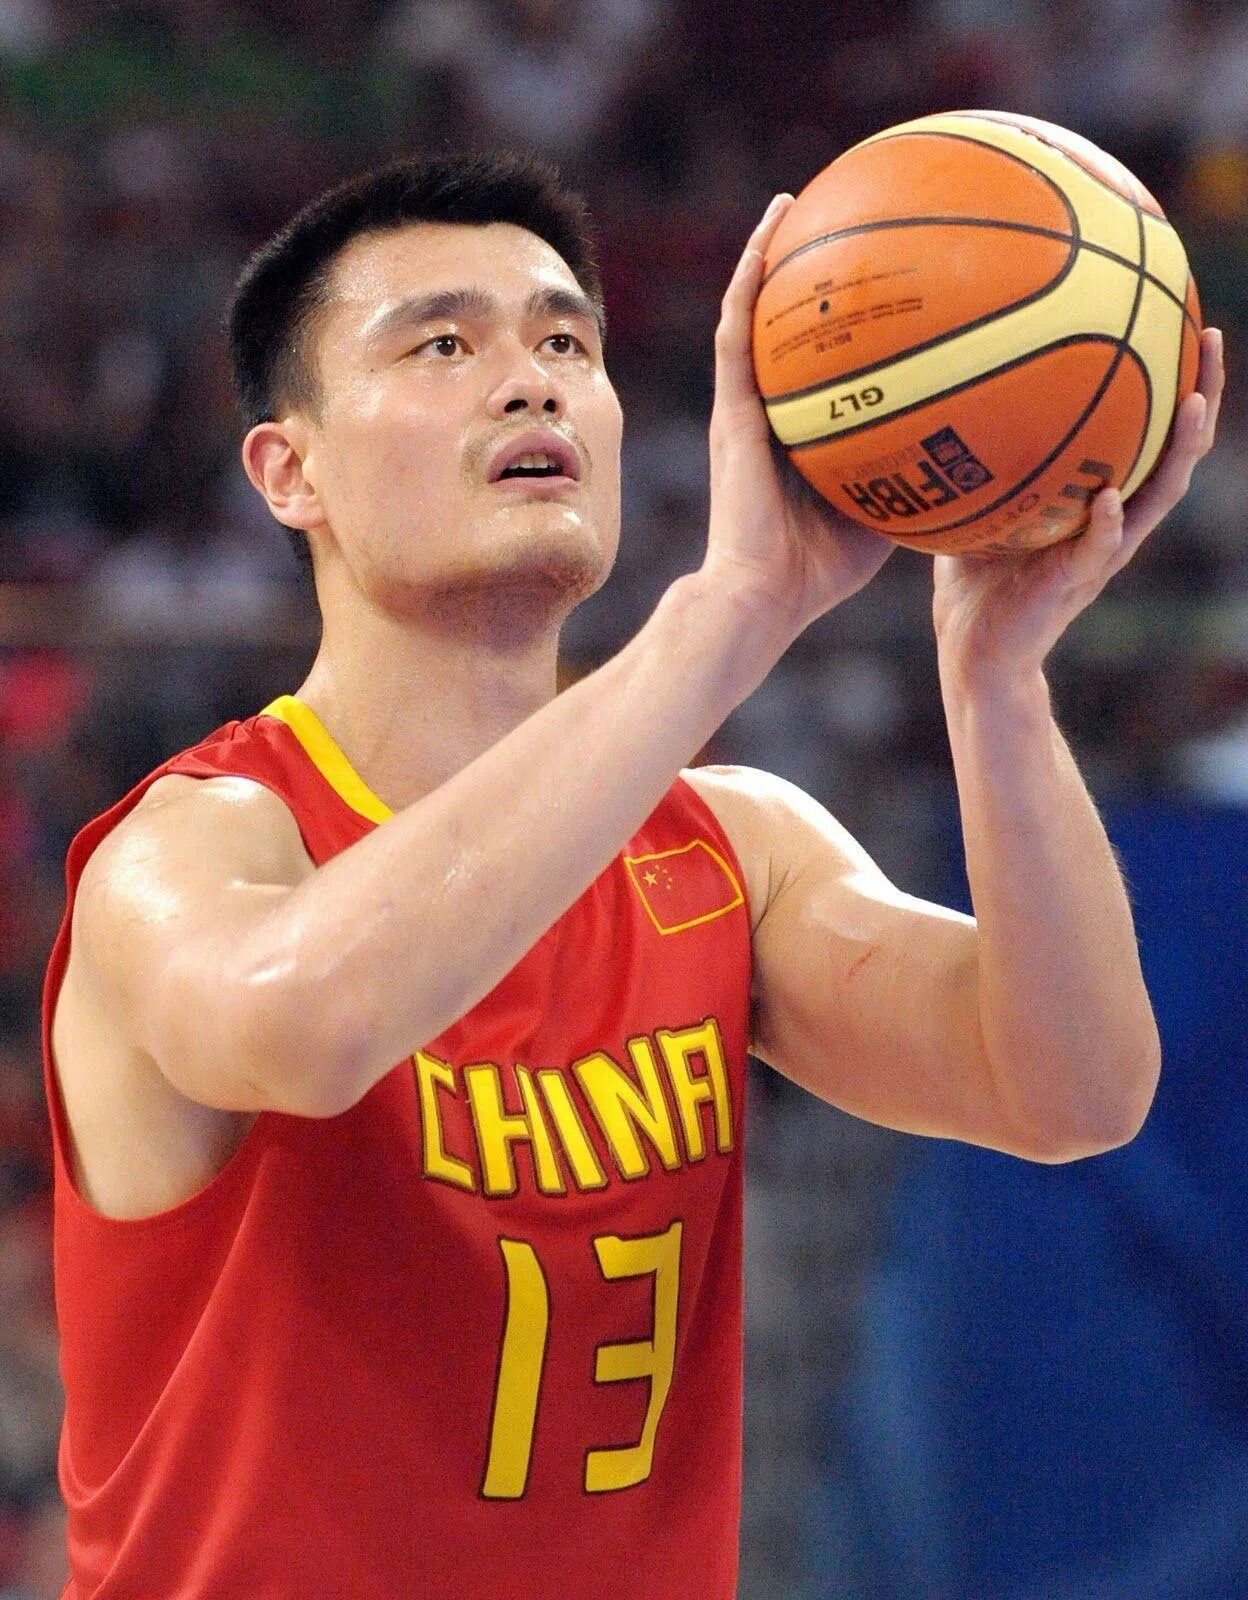 Yao ming. Яо мин. Яо минь баскетболист. Китайский баскетболист Яо мин рост. Яо минг рост.